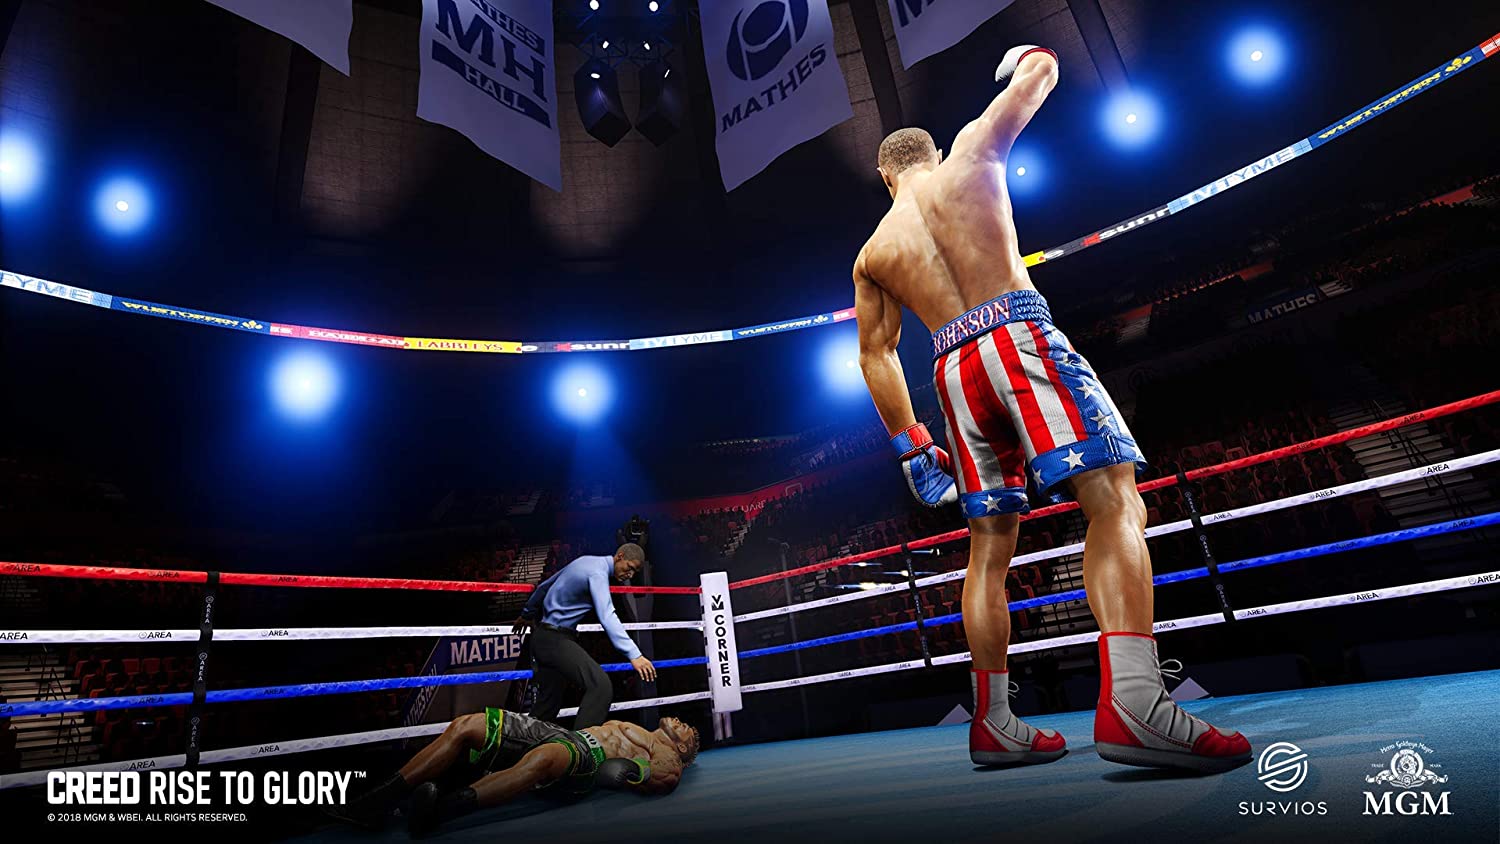 Скриншоты Creed: Rise to Glory [PS VR, английская версия] интернет-магазин Омегагейм